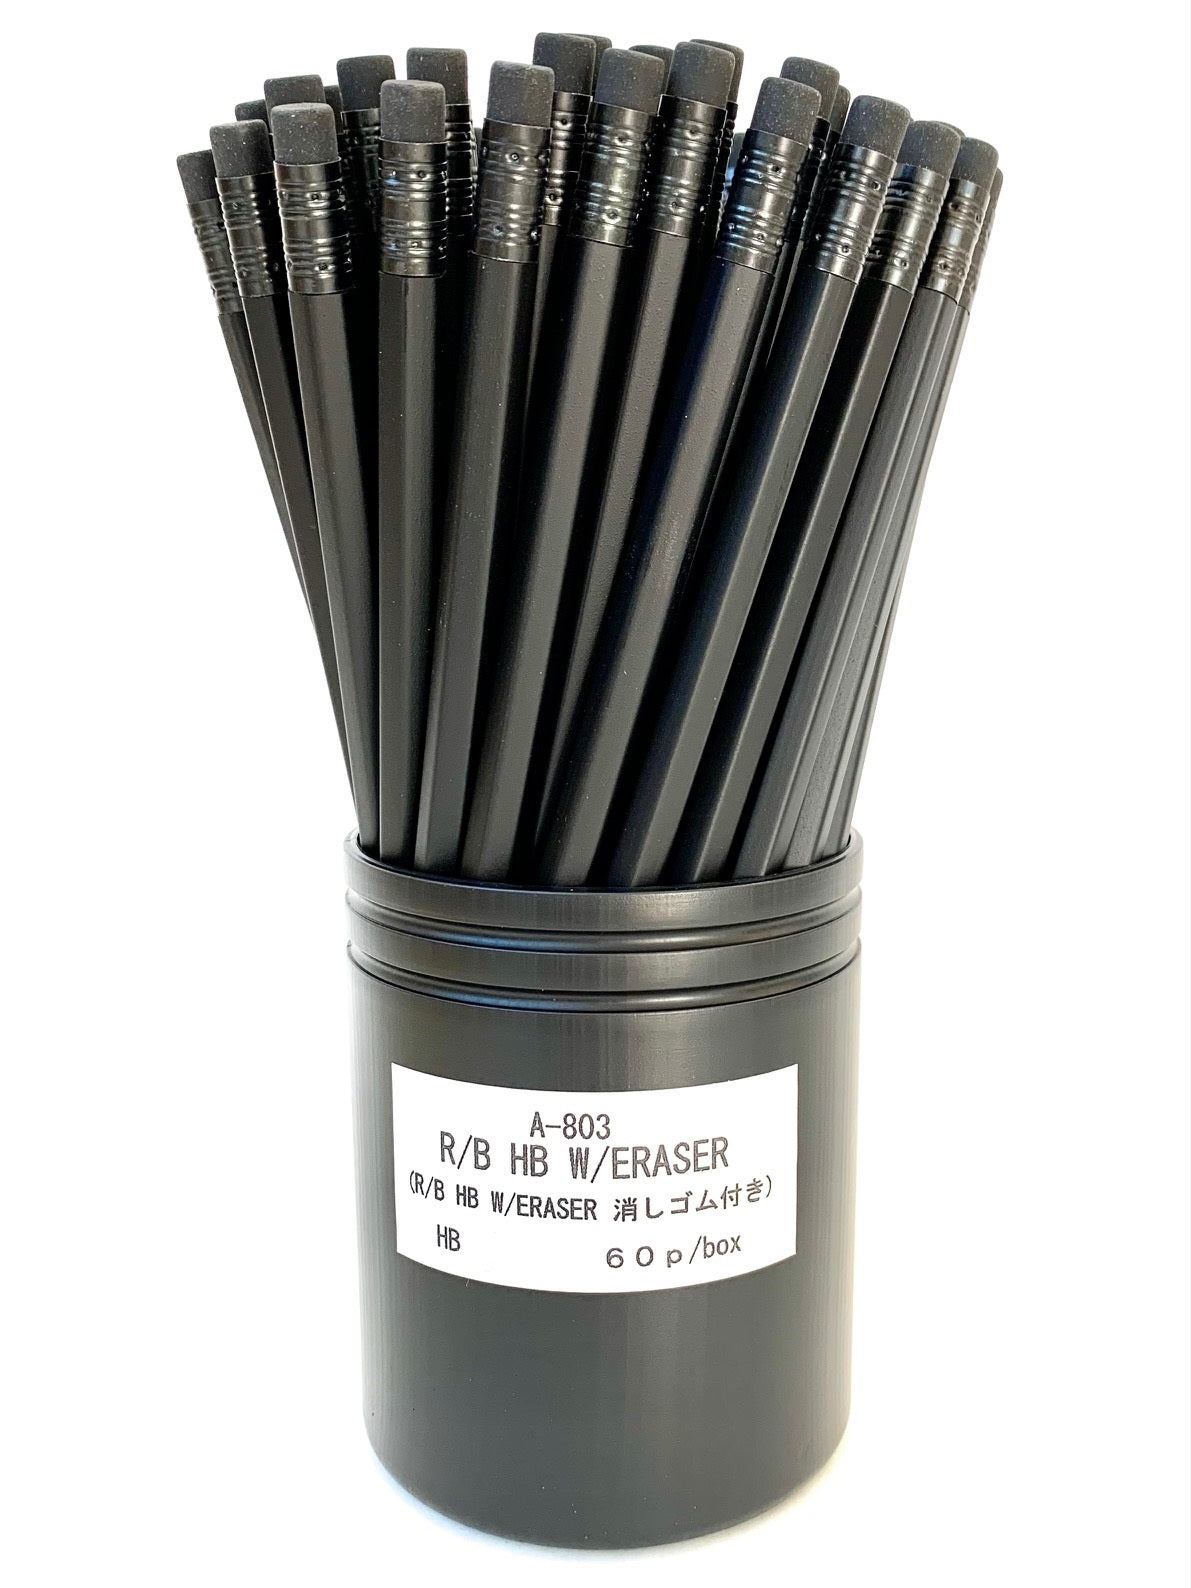 21202 All Black Lead Pencils-60